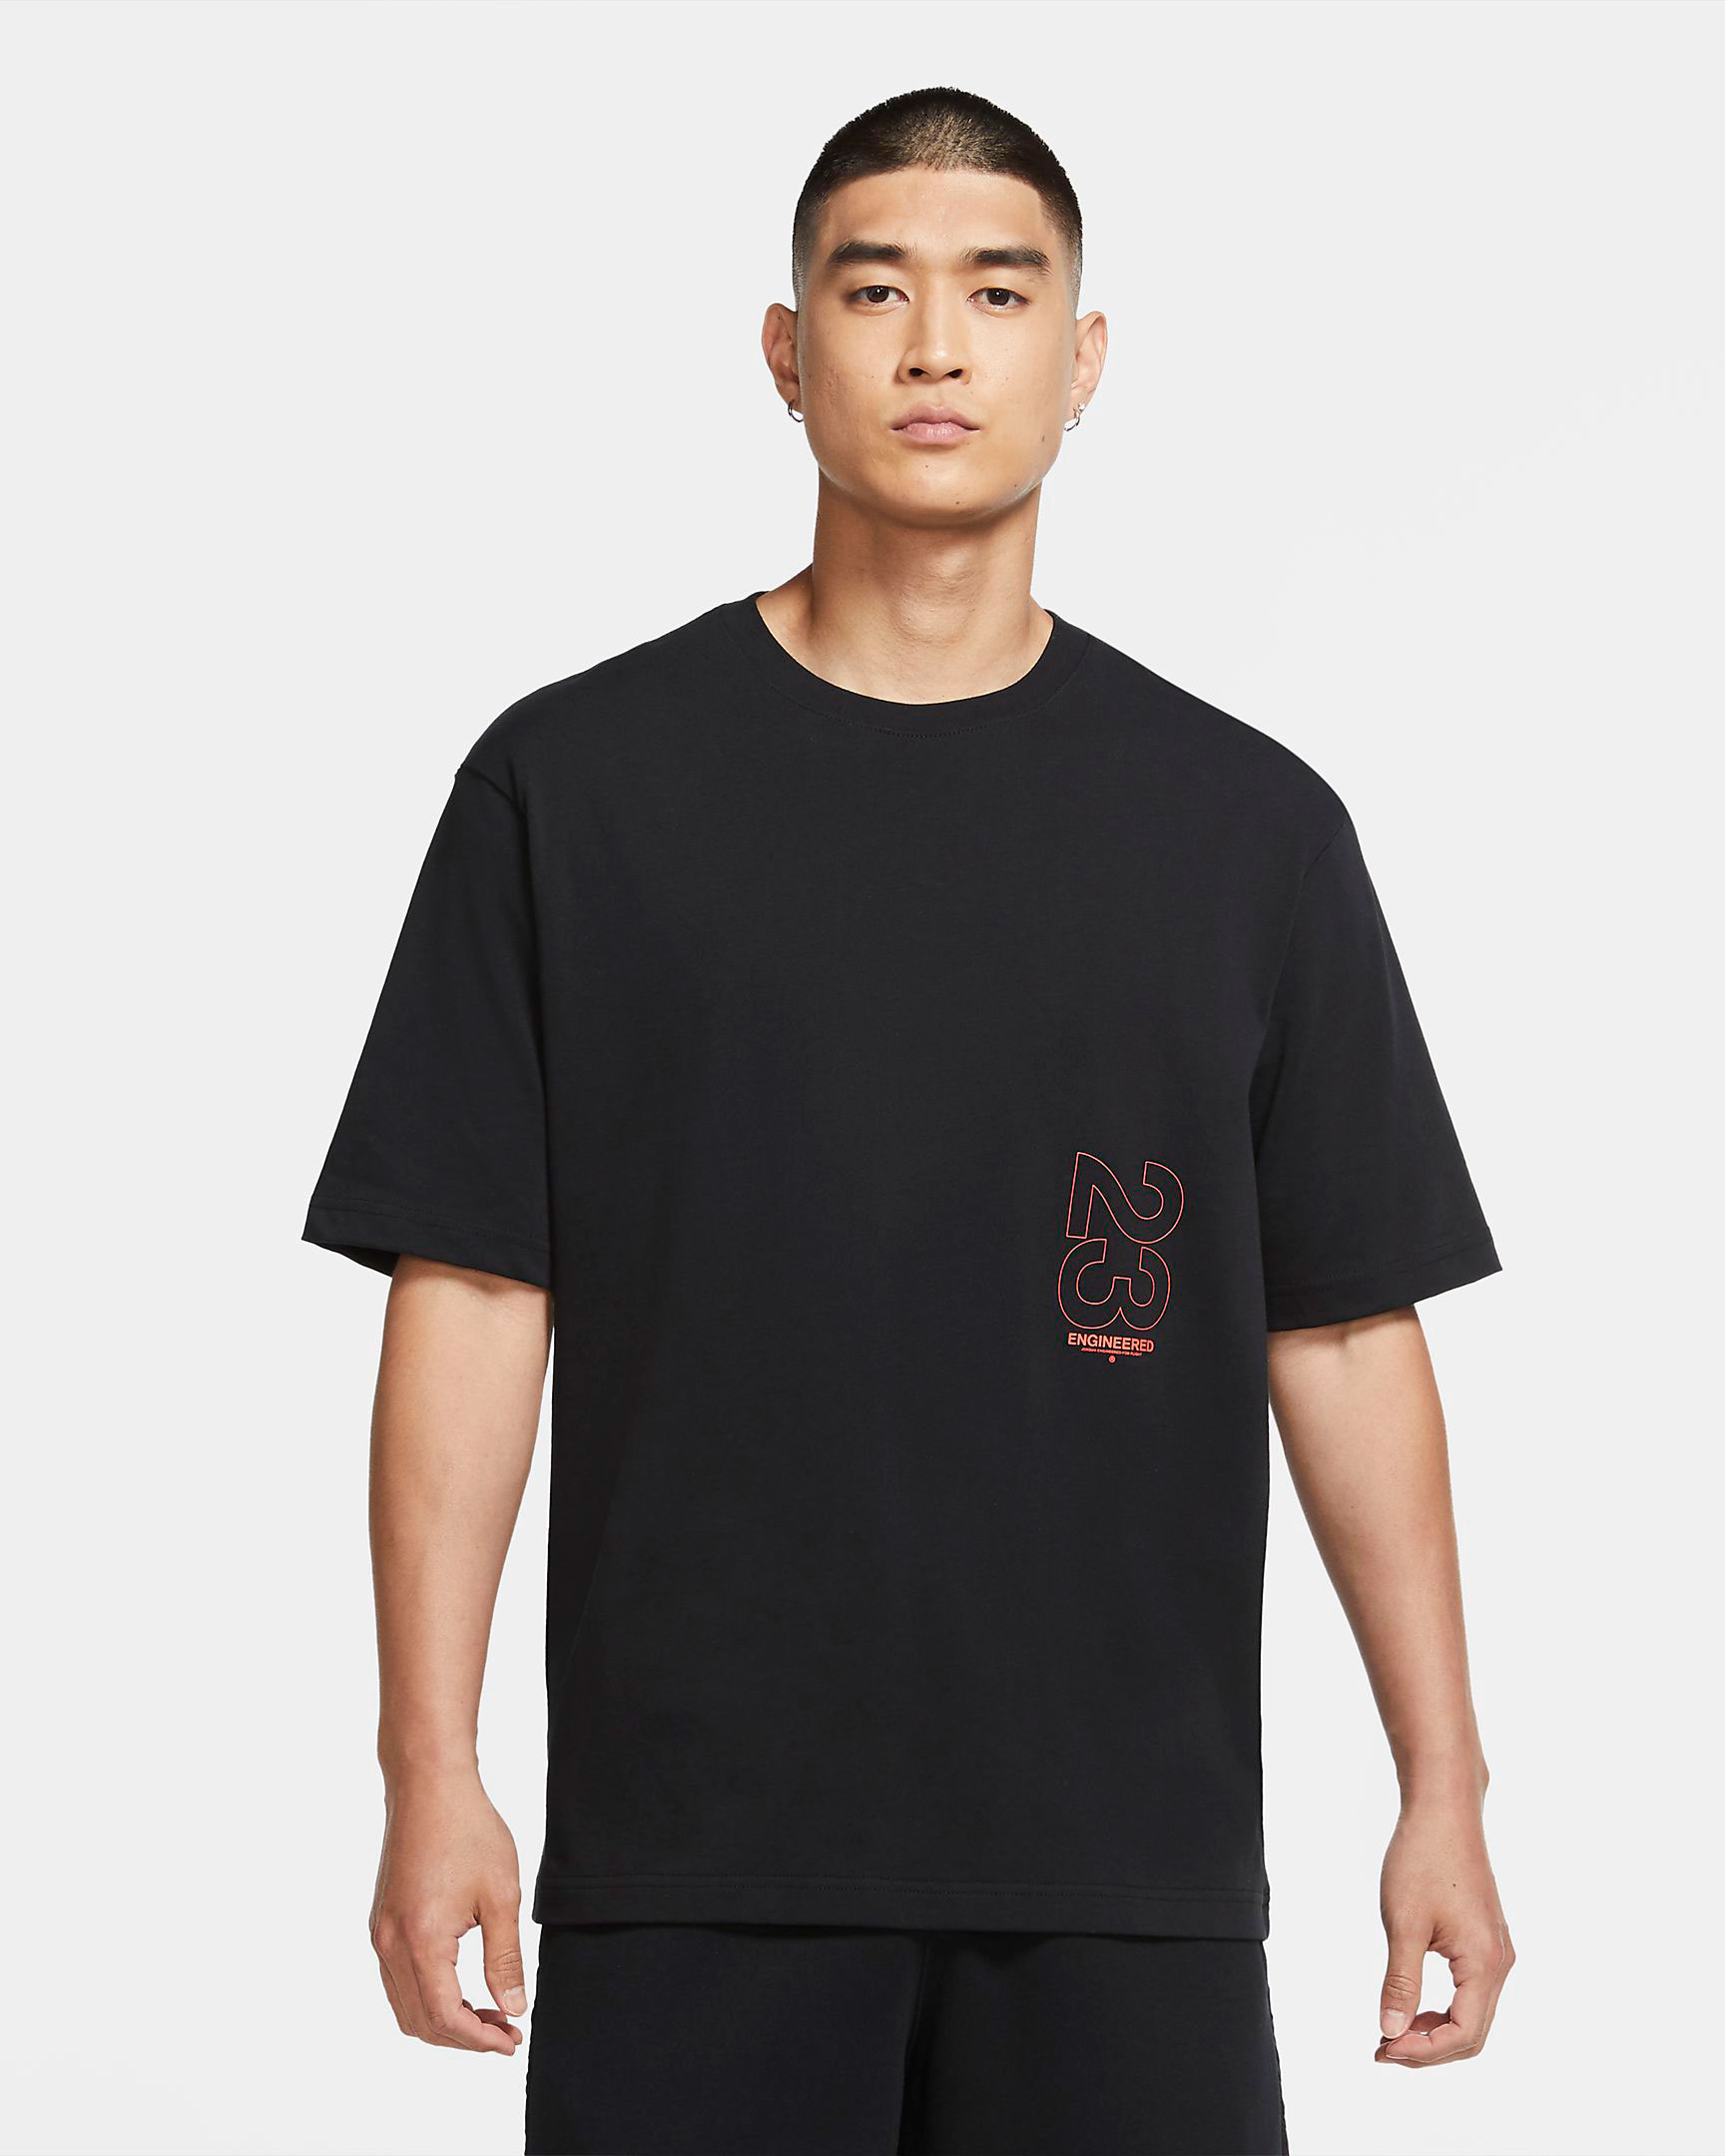 jordan-23-engineered-tee-shirt-black-infrared-1